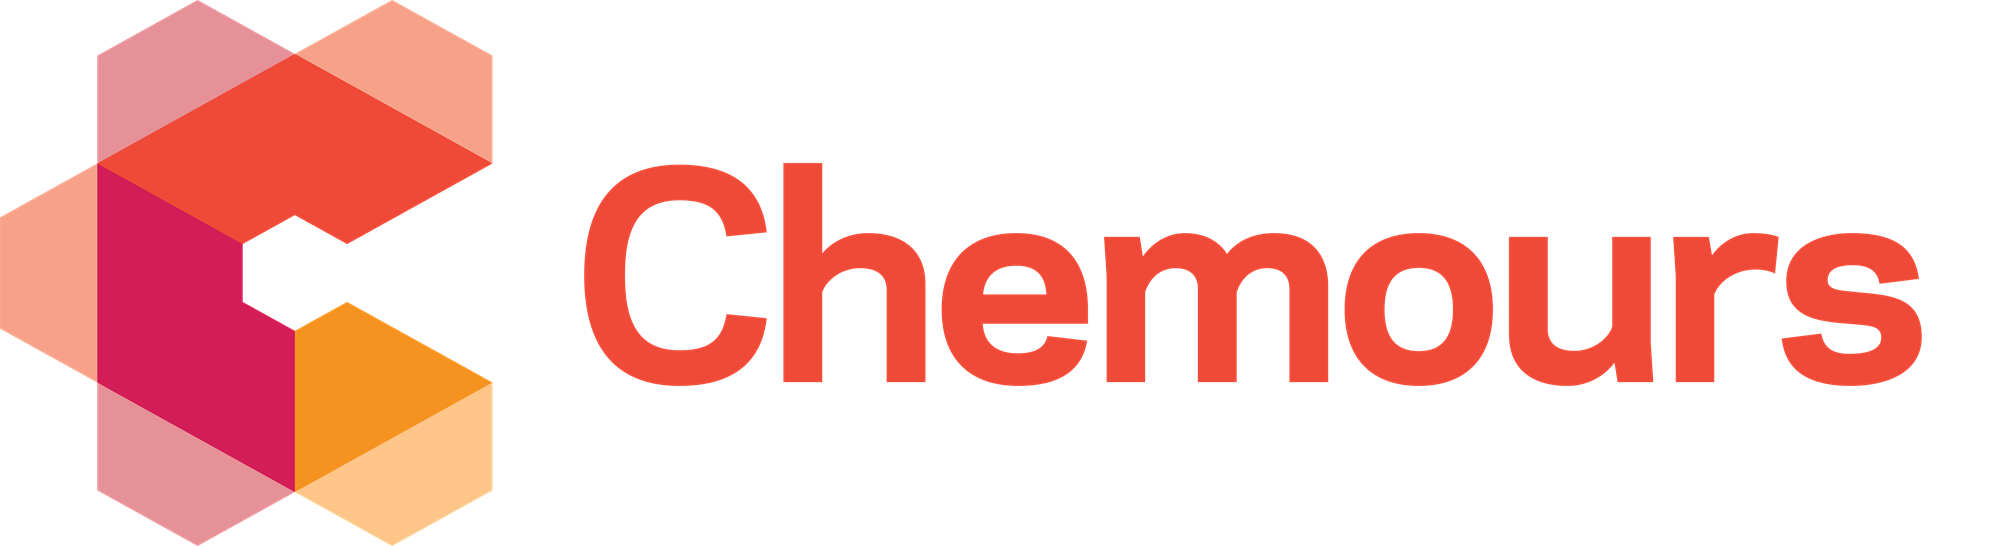 Chemours Brands